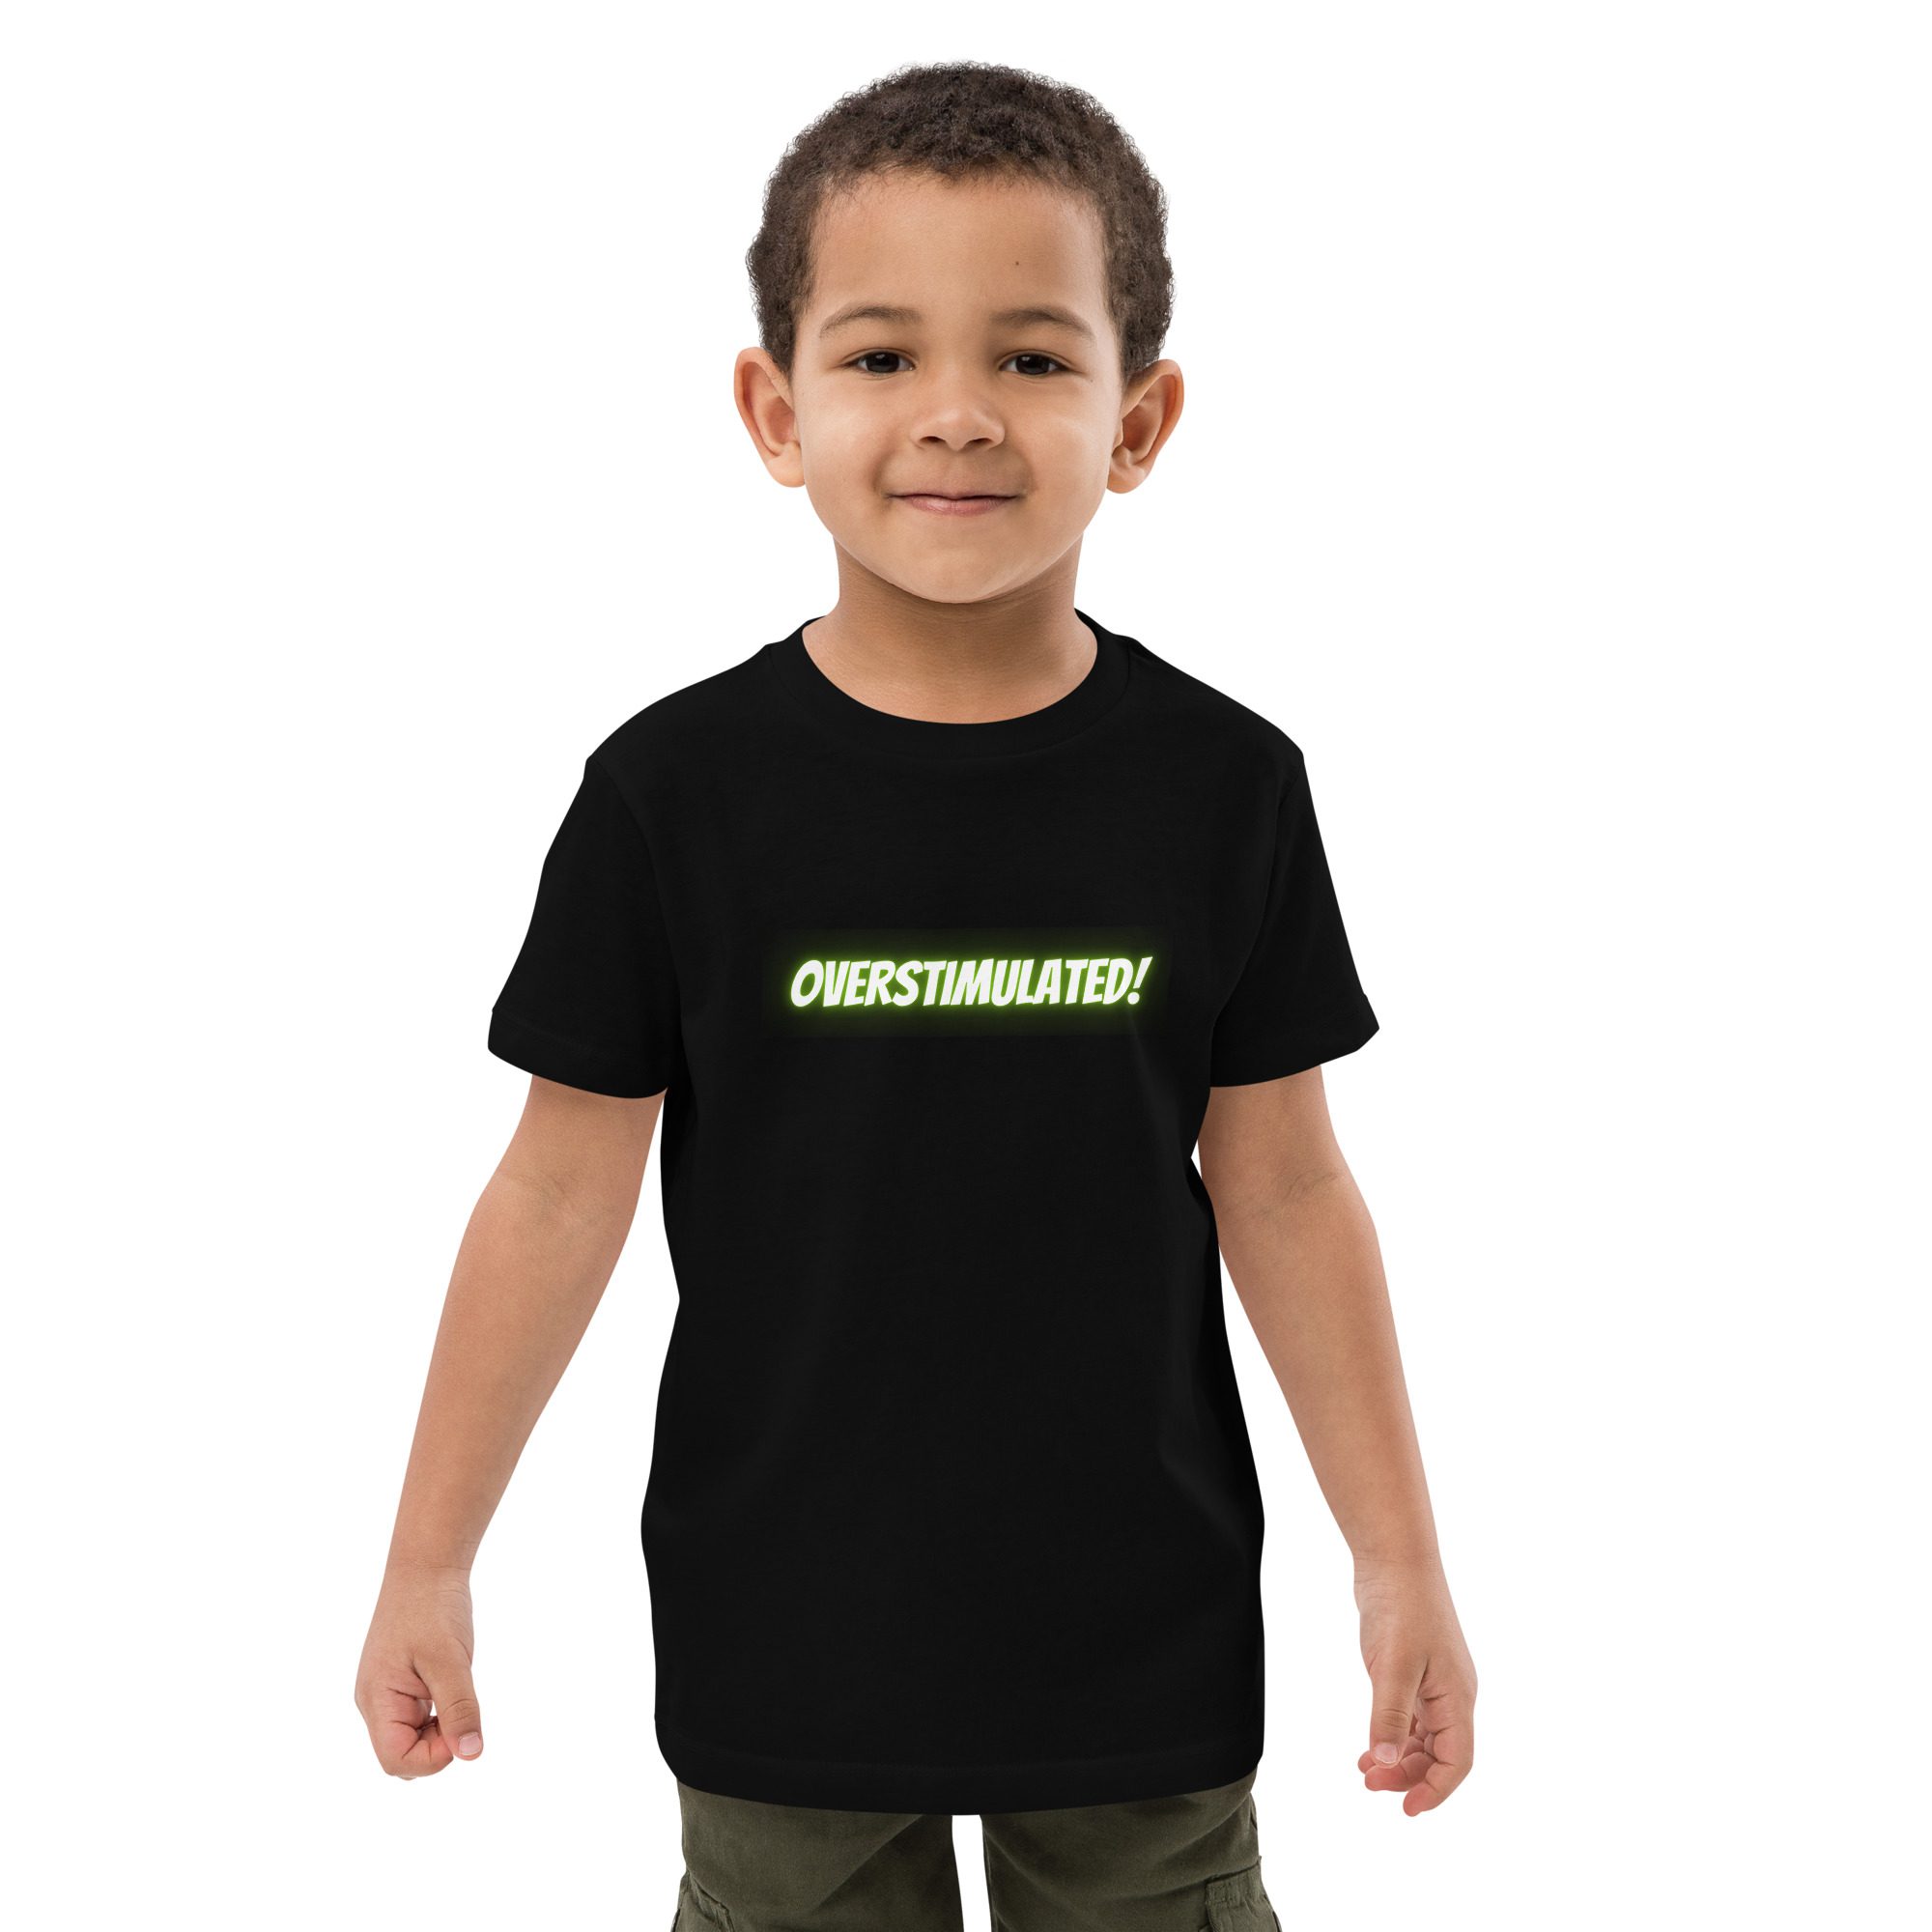 OVERSTIMULATED! Organic Cotton Kids T-shirt